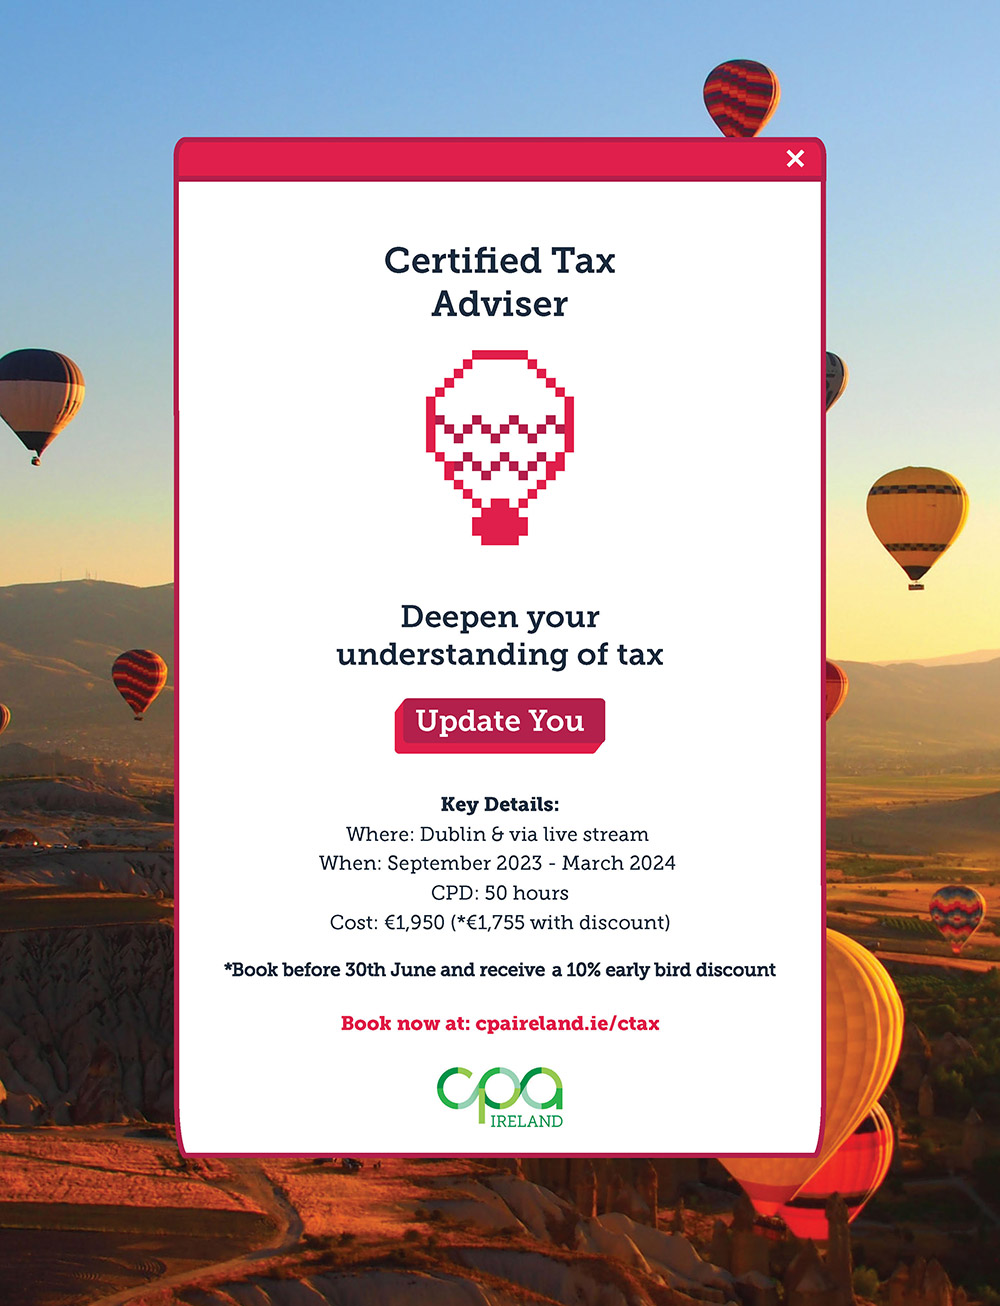 CPA Ireland Certified Tax Adviser Advertisement